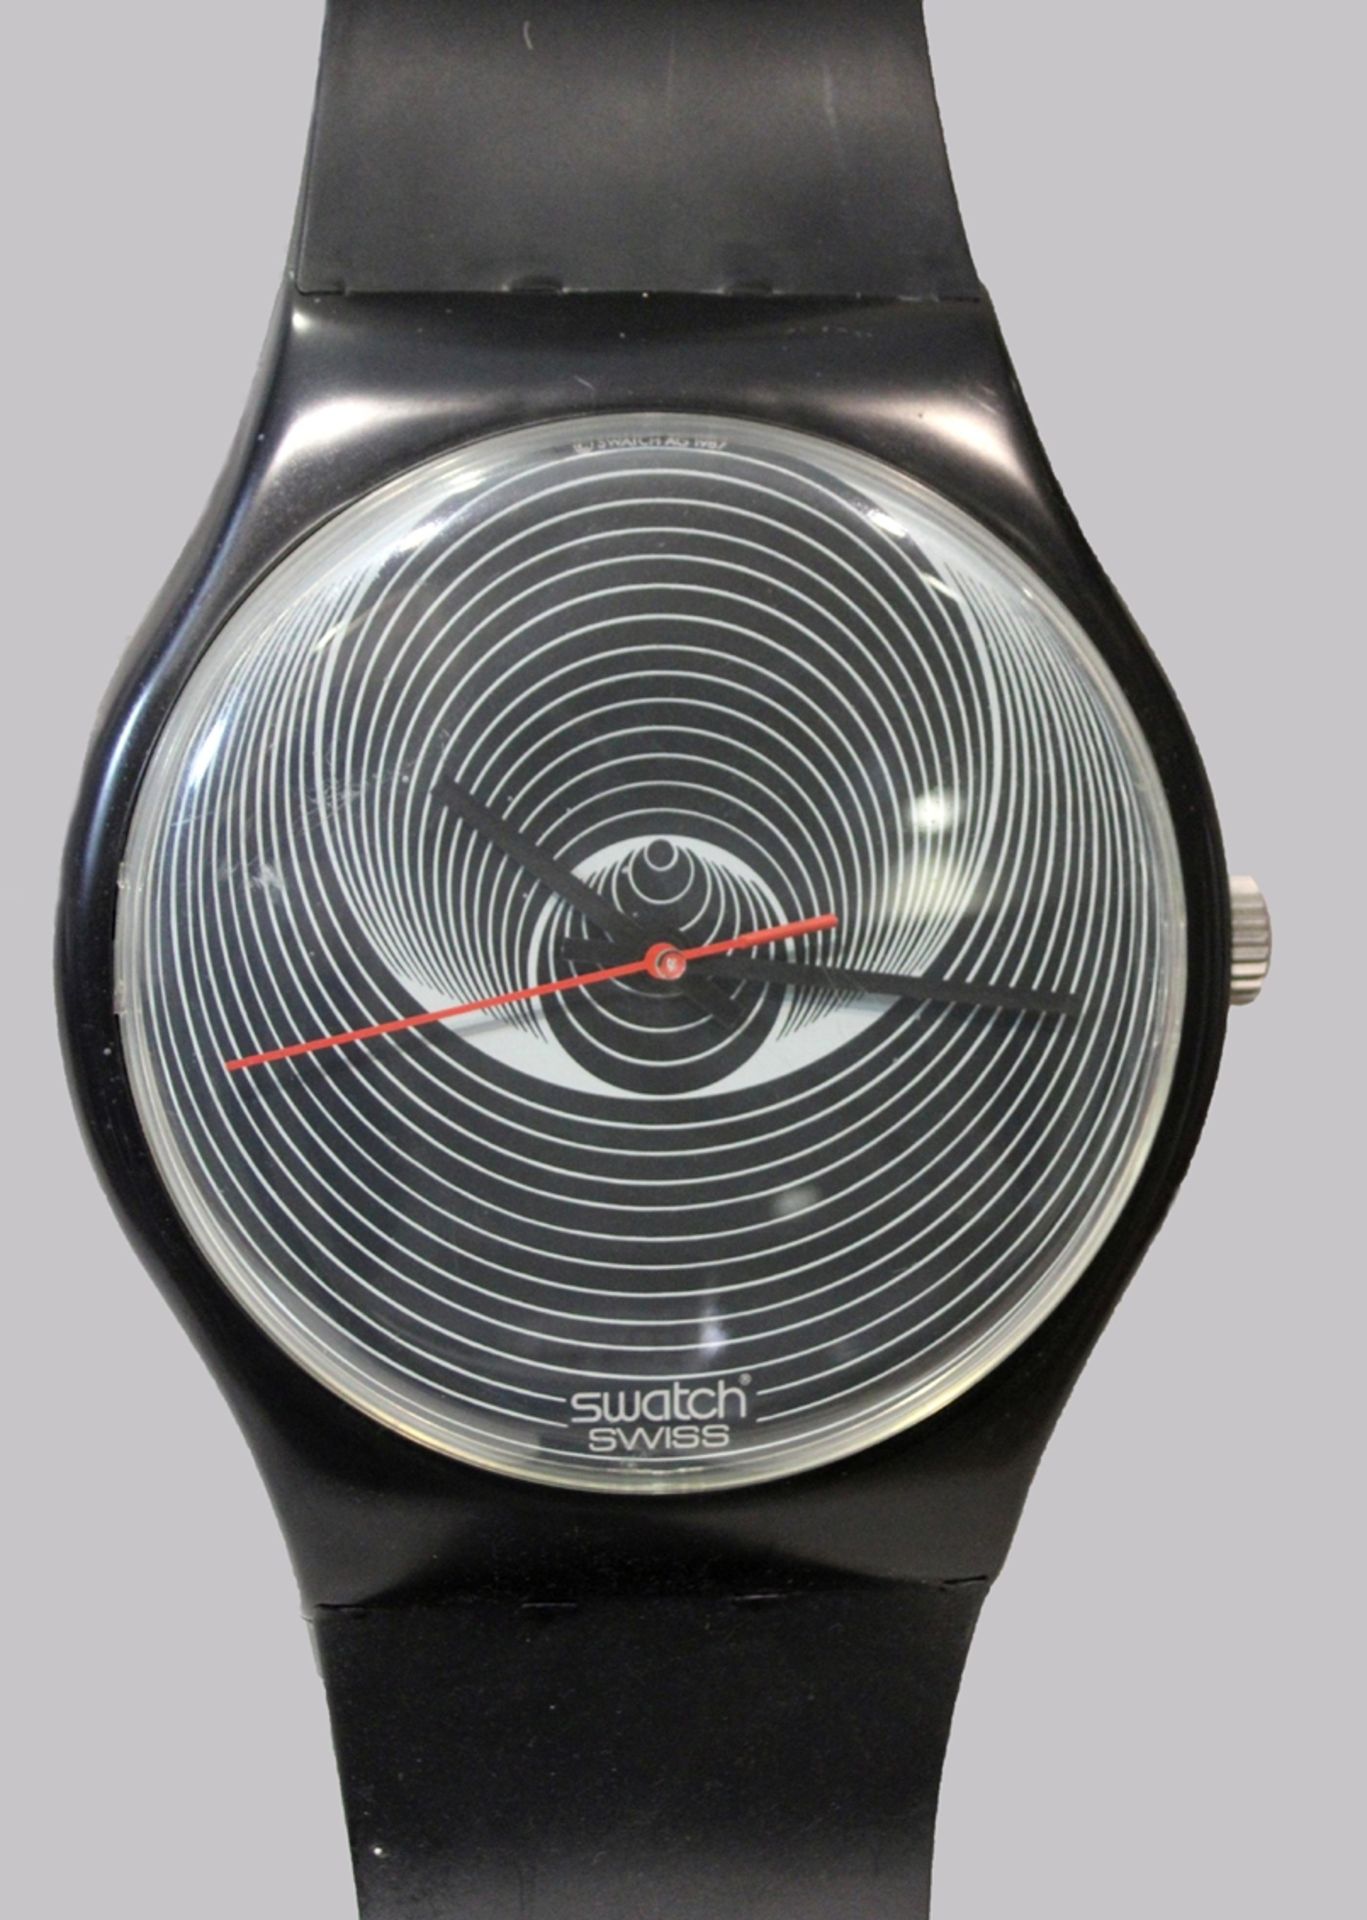 Swatch Wanduhr, 1987, Vulcano Maxi, L.: 208 cm. Guter Zustand. - Bild 2 aus 4